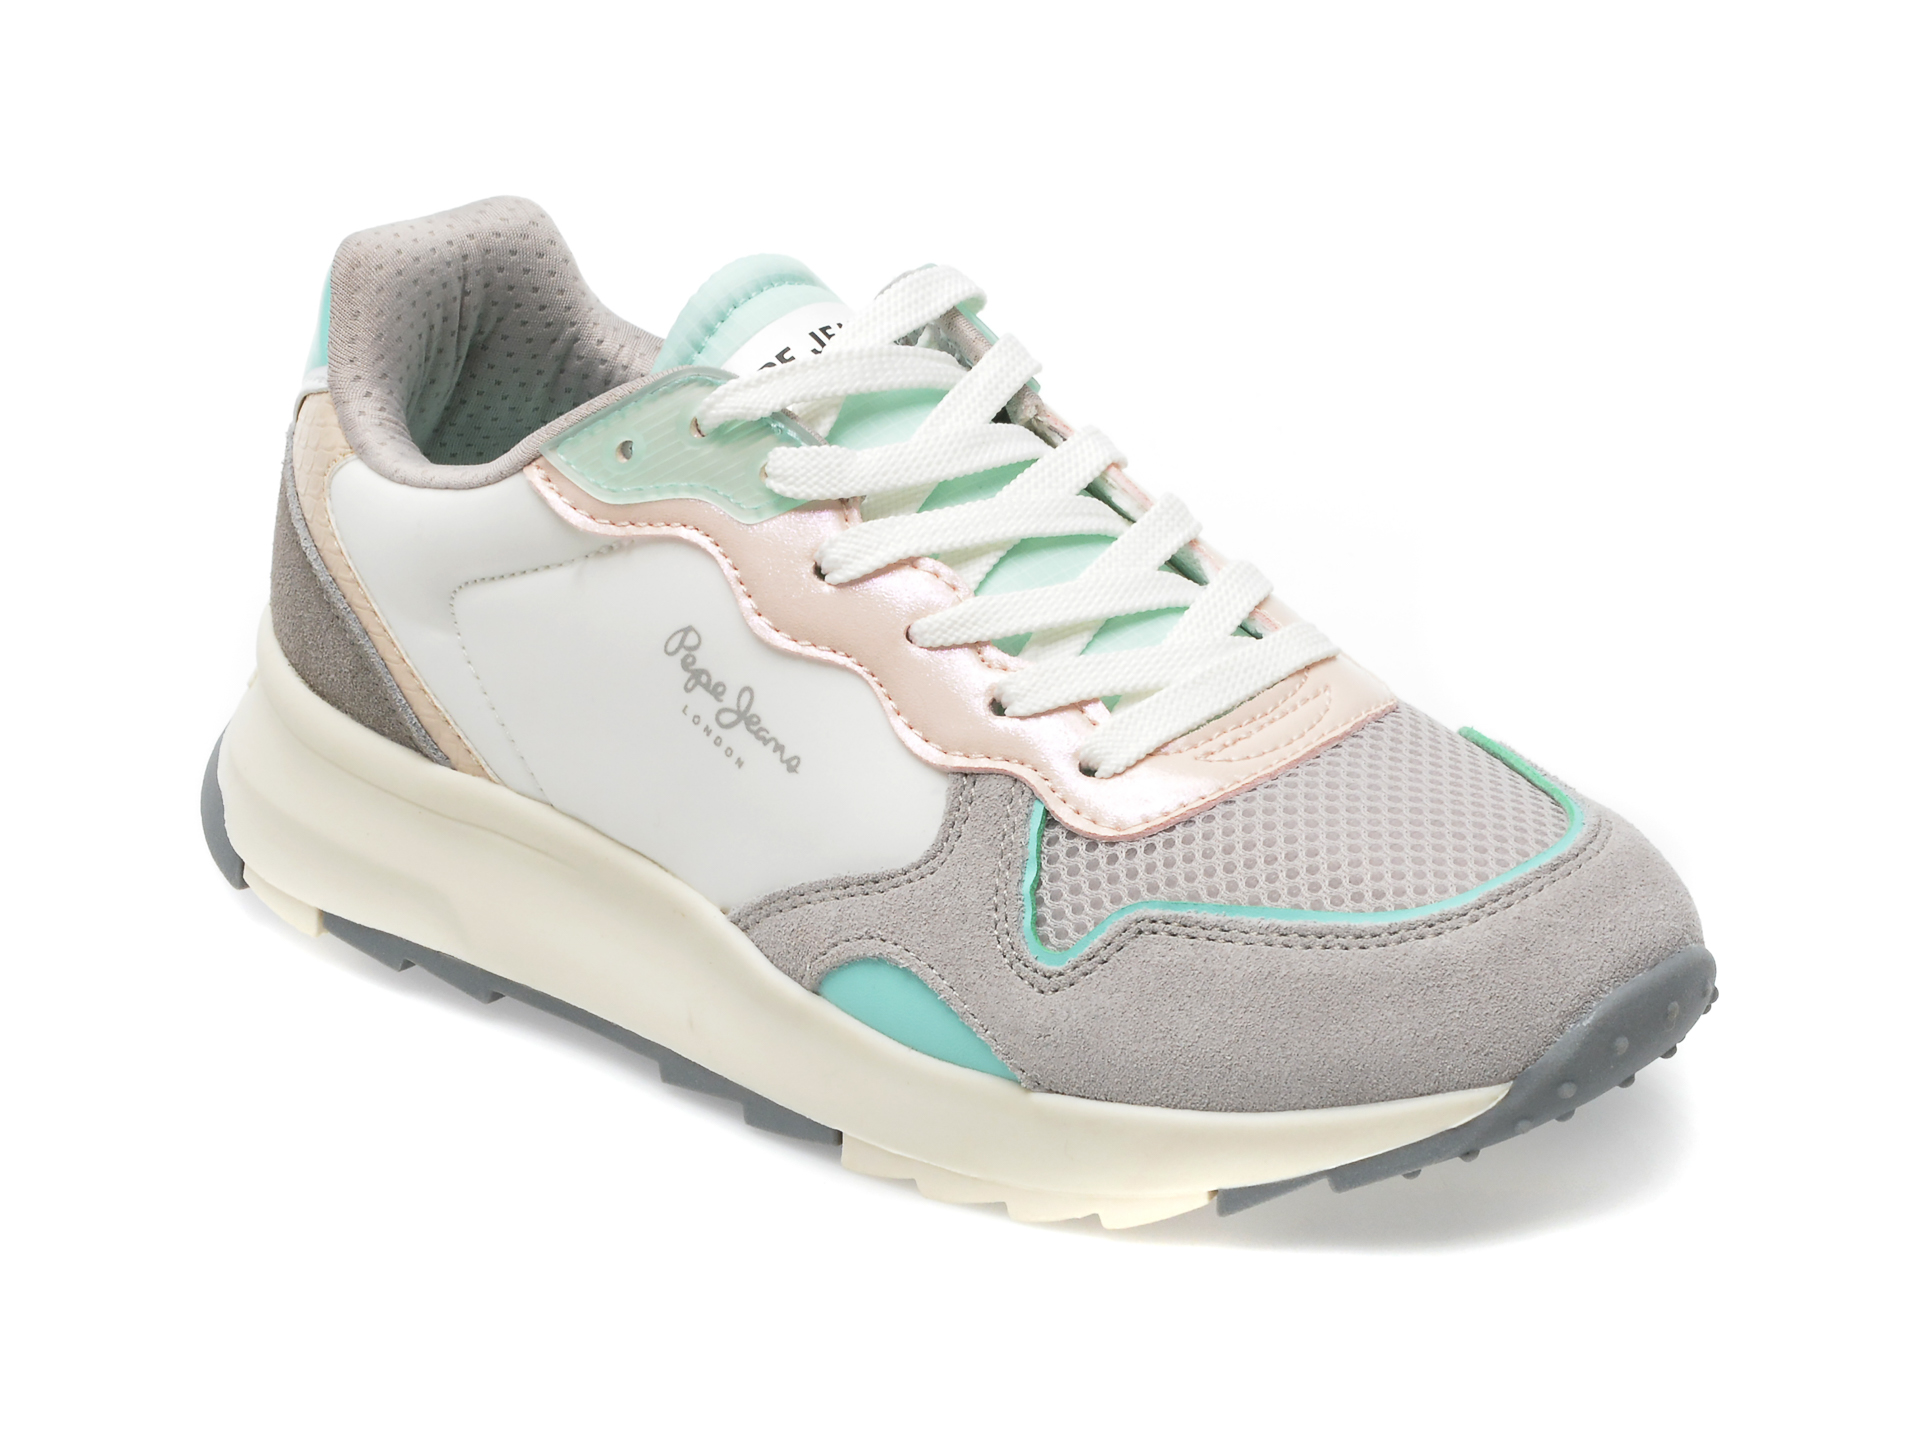 Pantofi sport PEPE JEANS multicolori, LS31452, din piele intoarsa si material textil Answear 2023-06-01